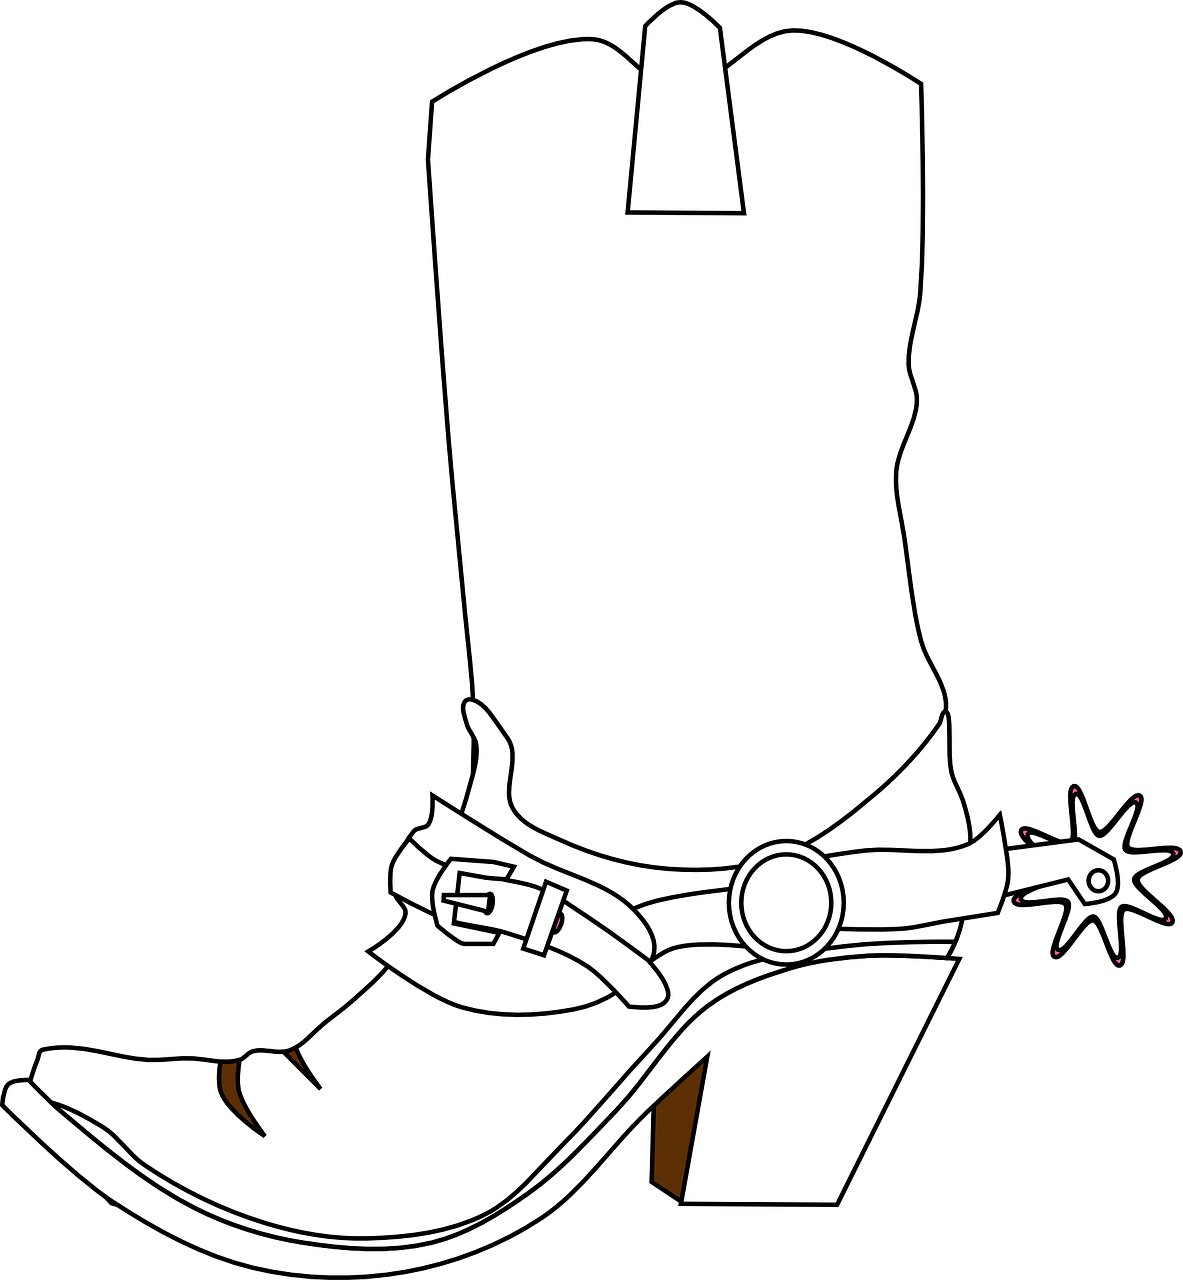 Outlined Cowboy Boot Illustration PNG